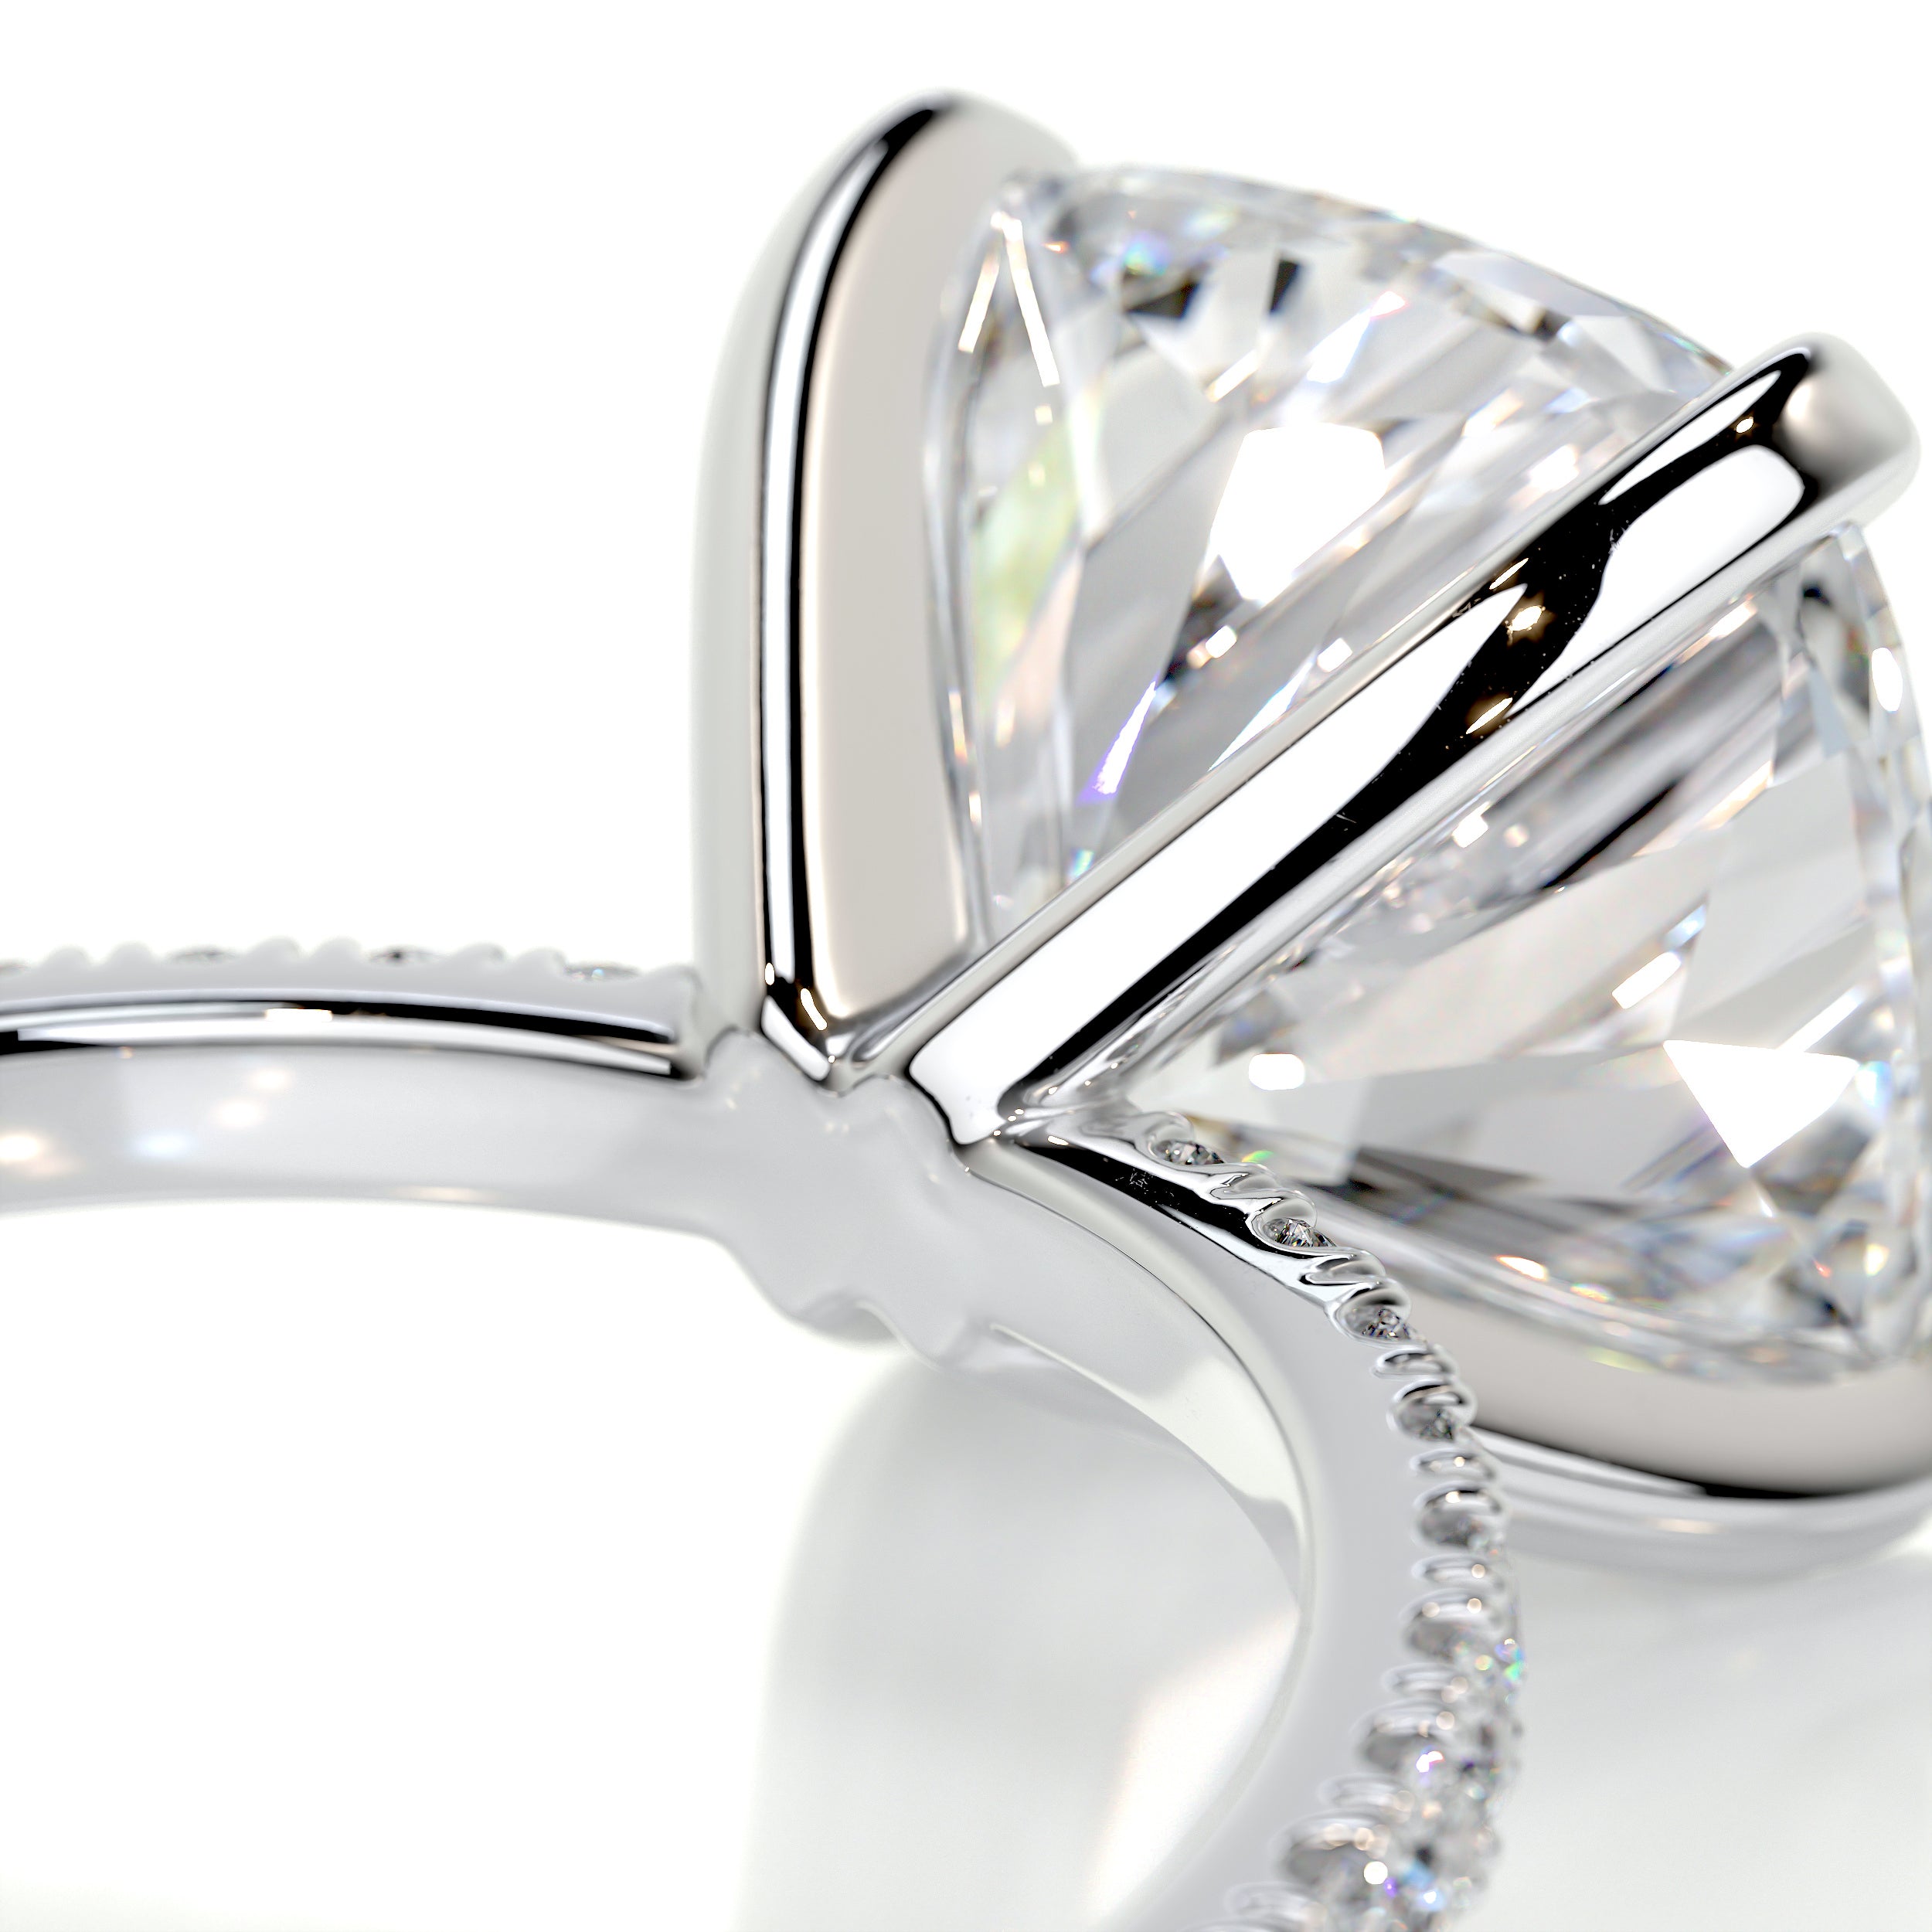 Stephanie Moissanite & Diamonds Ring -18K White Gold